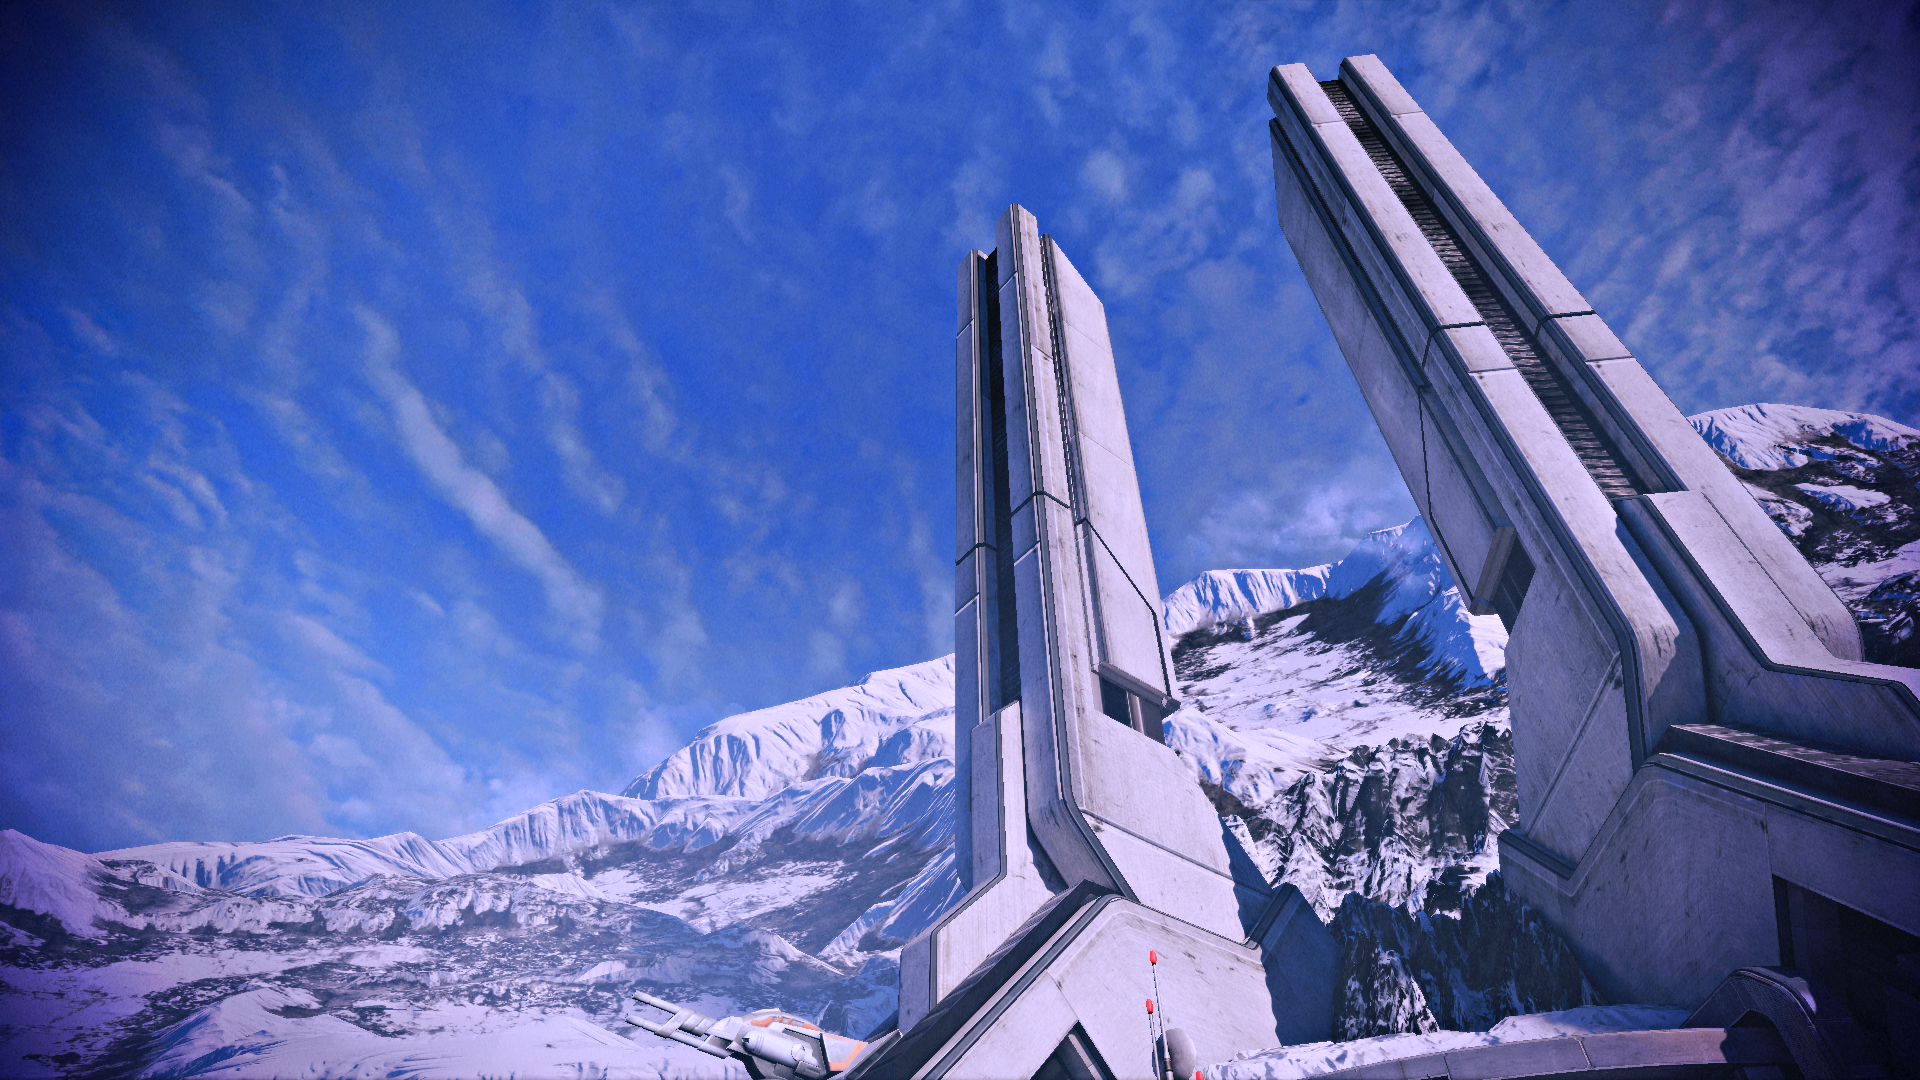 Video Games Mass Effect 3 Mass Effect Legendary Edition Sky Clouds Mountains Snow Blue White 1920x1080